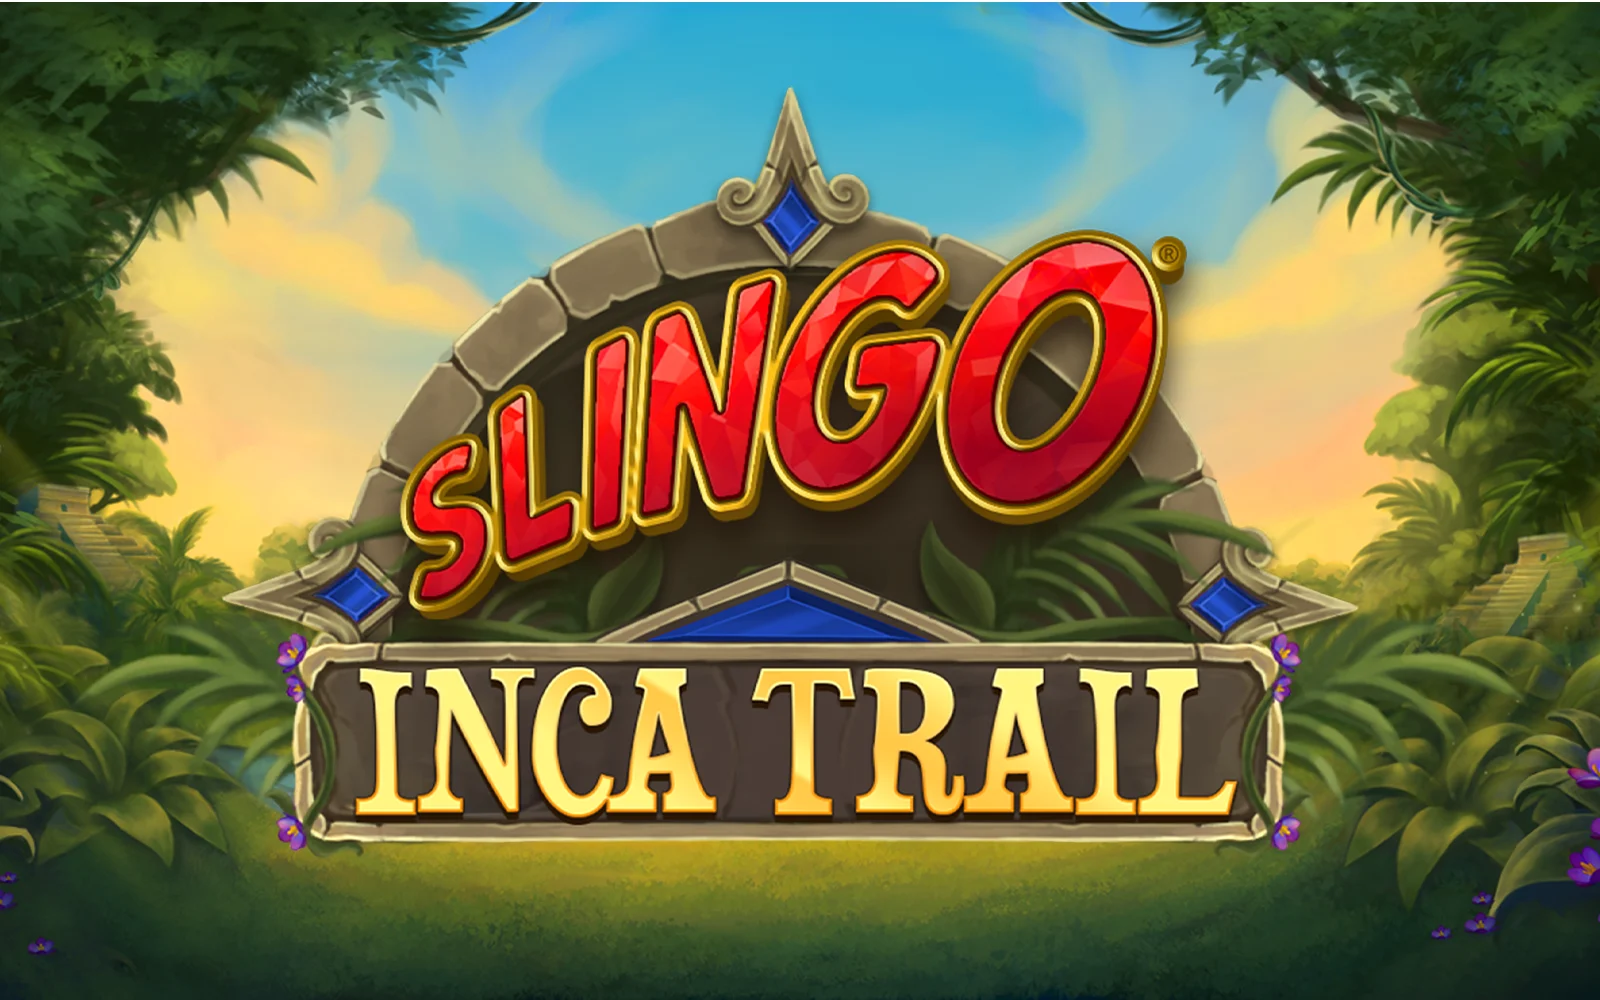 Play Slingo Inca Trail on Starcasino.be online casino